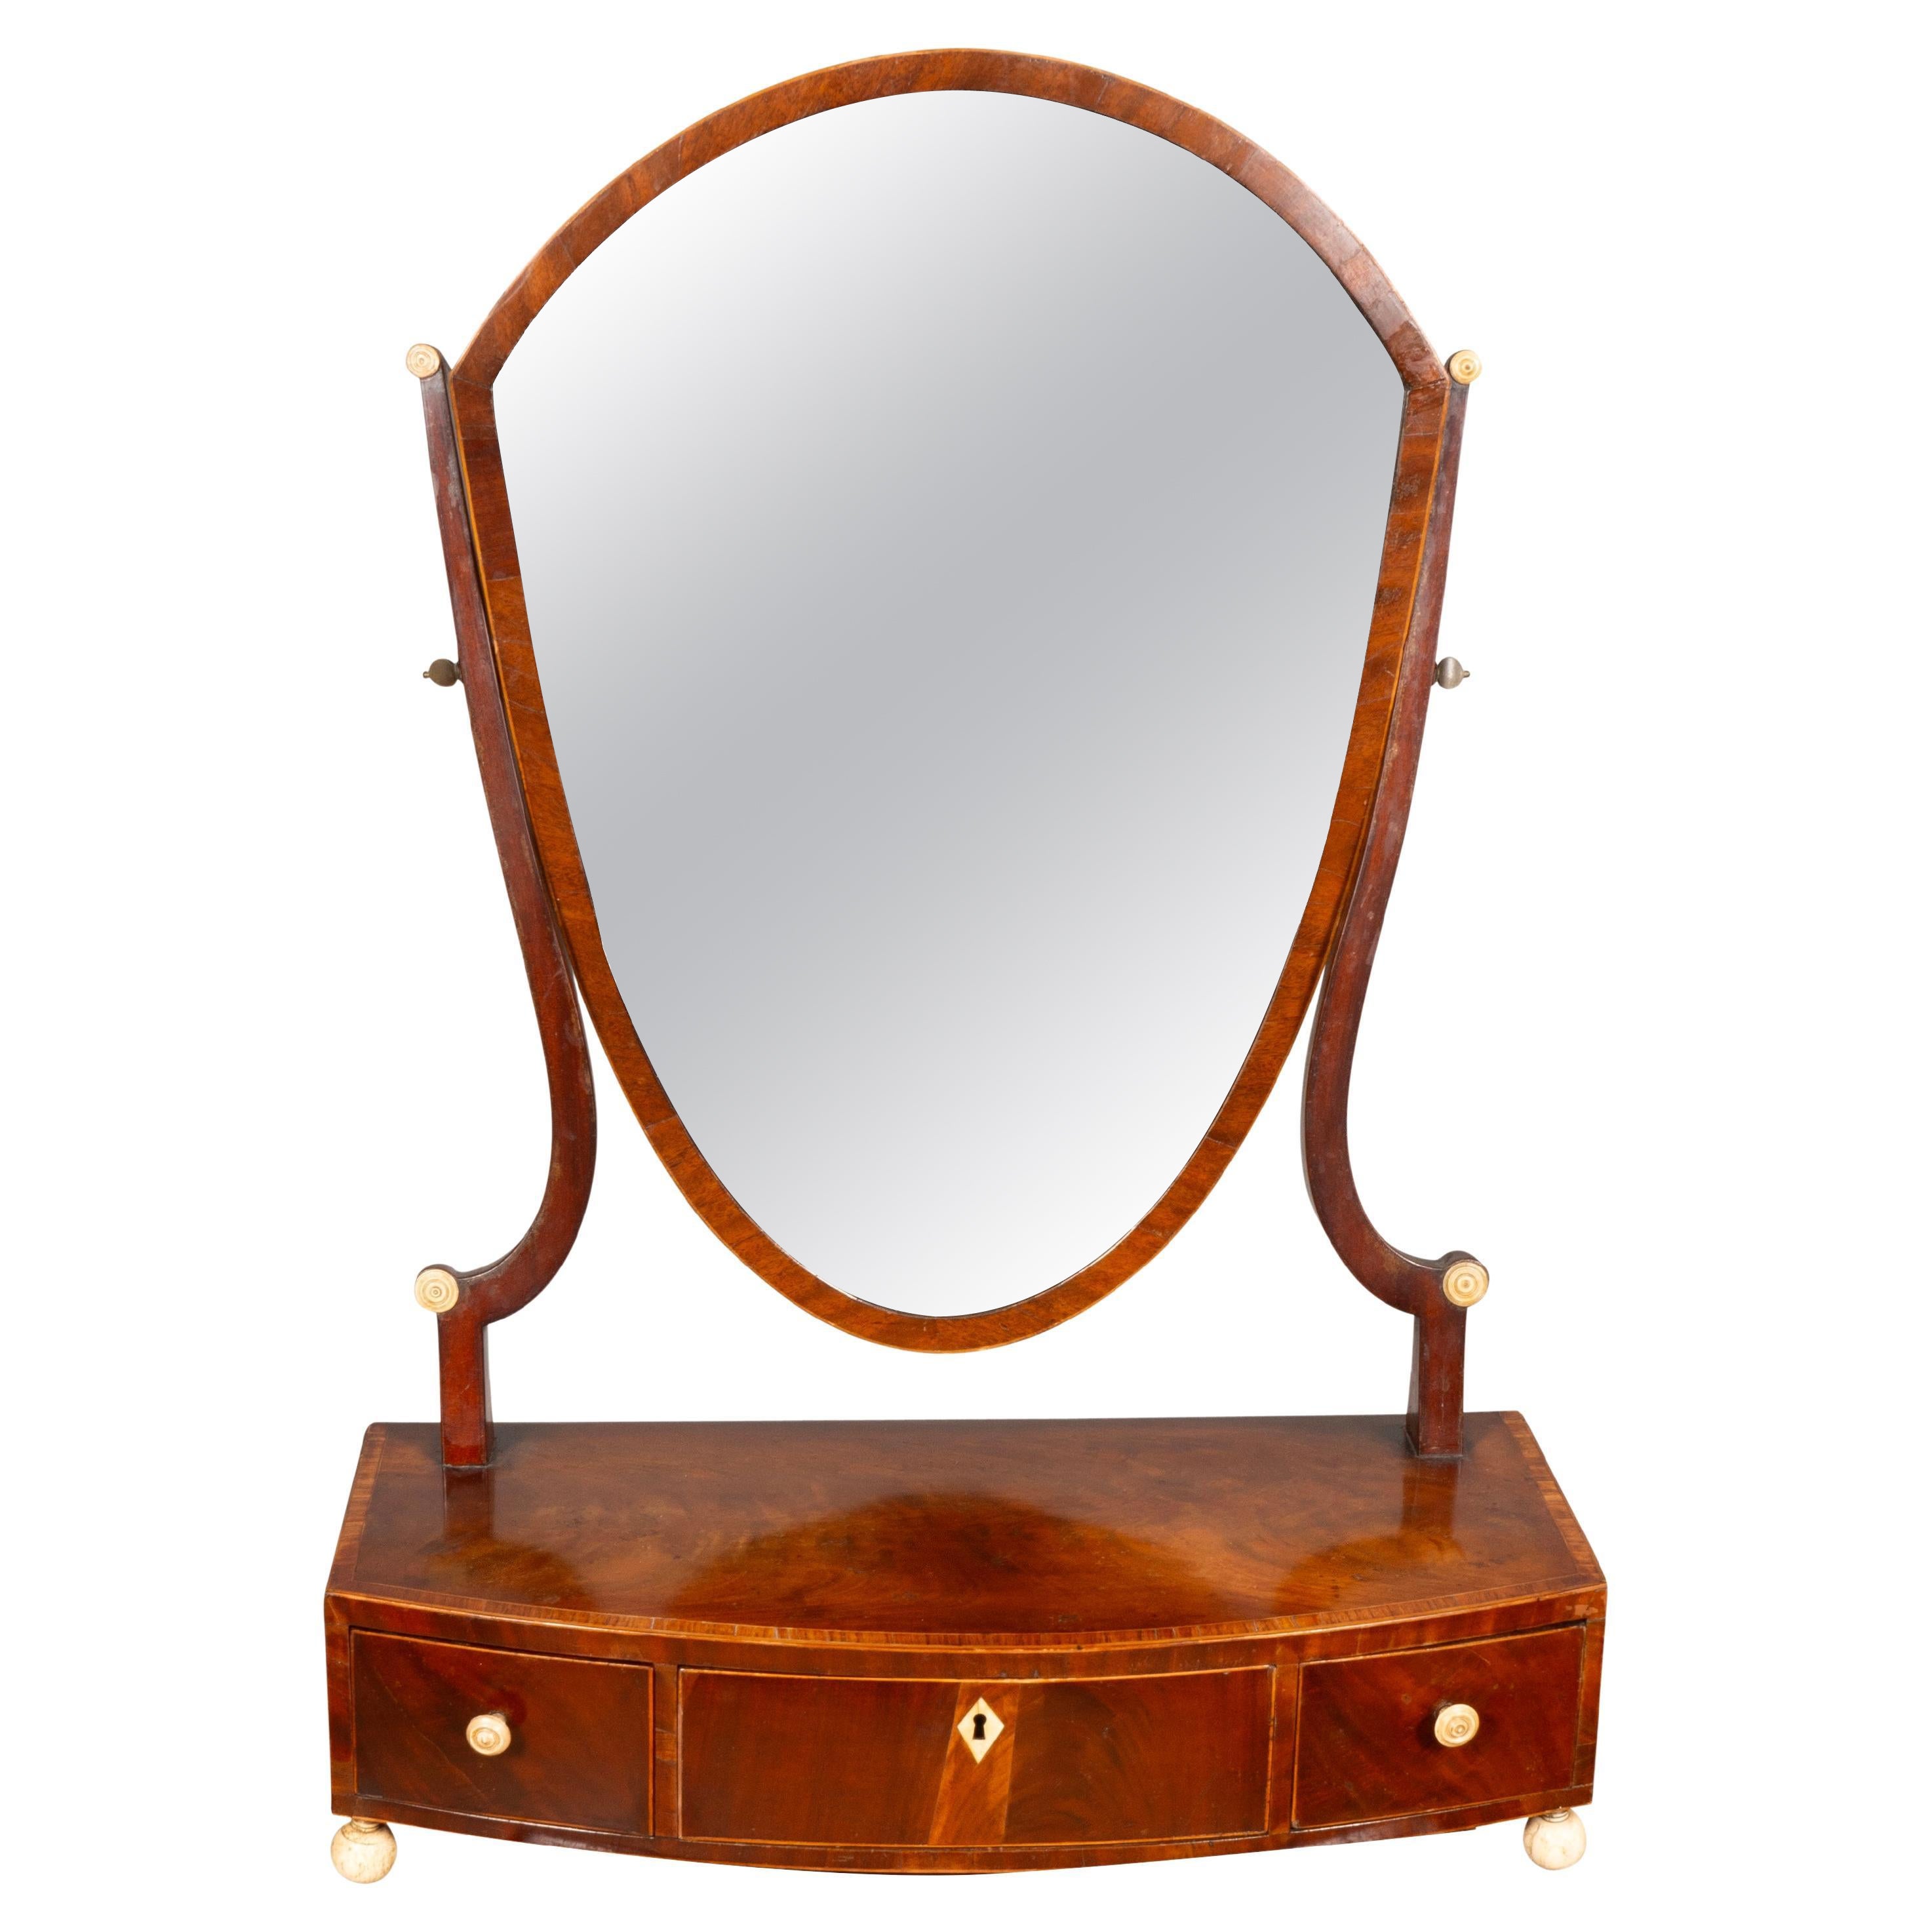 George III Mahogany Dressing Mirror